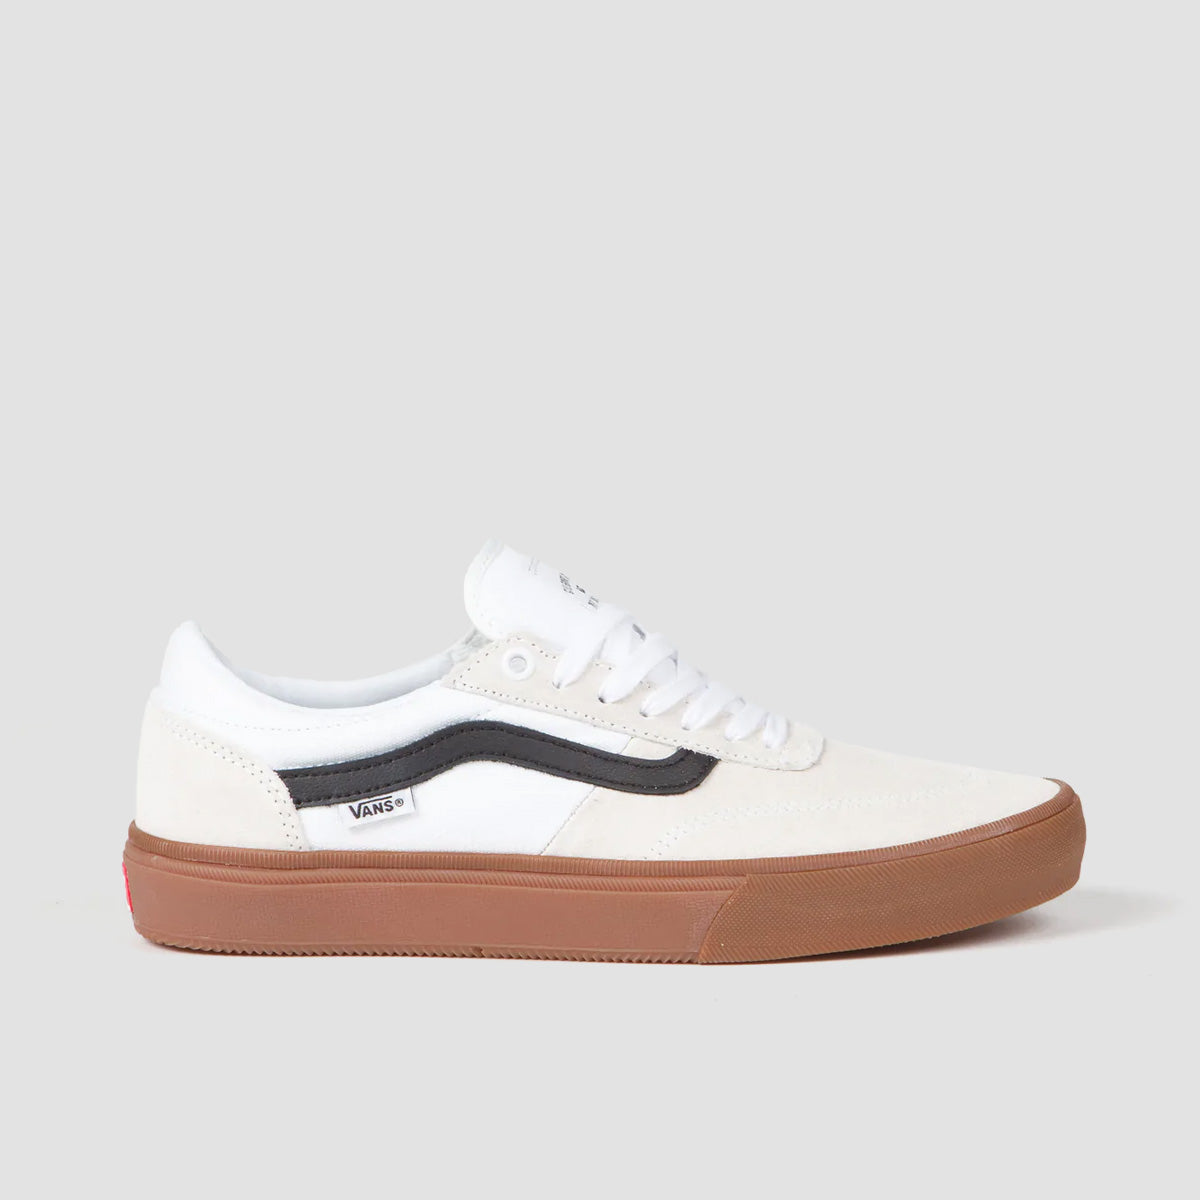 Vans Gilbert Crockett Shoes - White/Gum